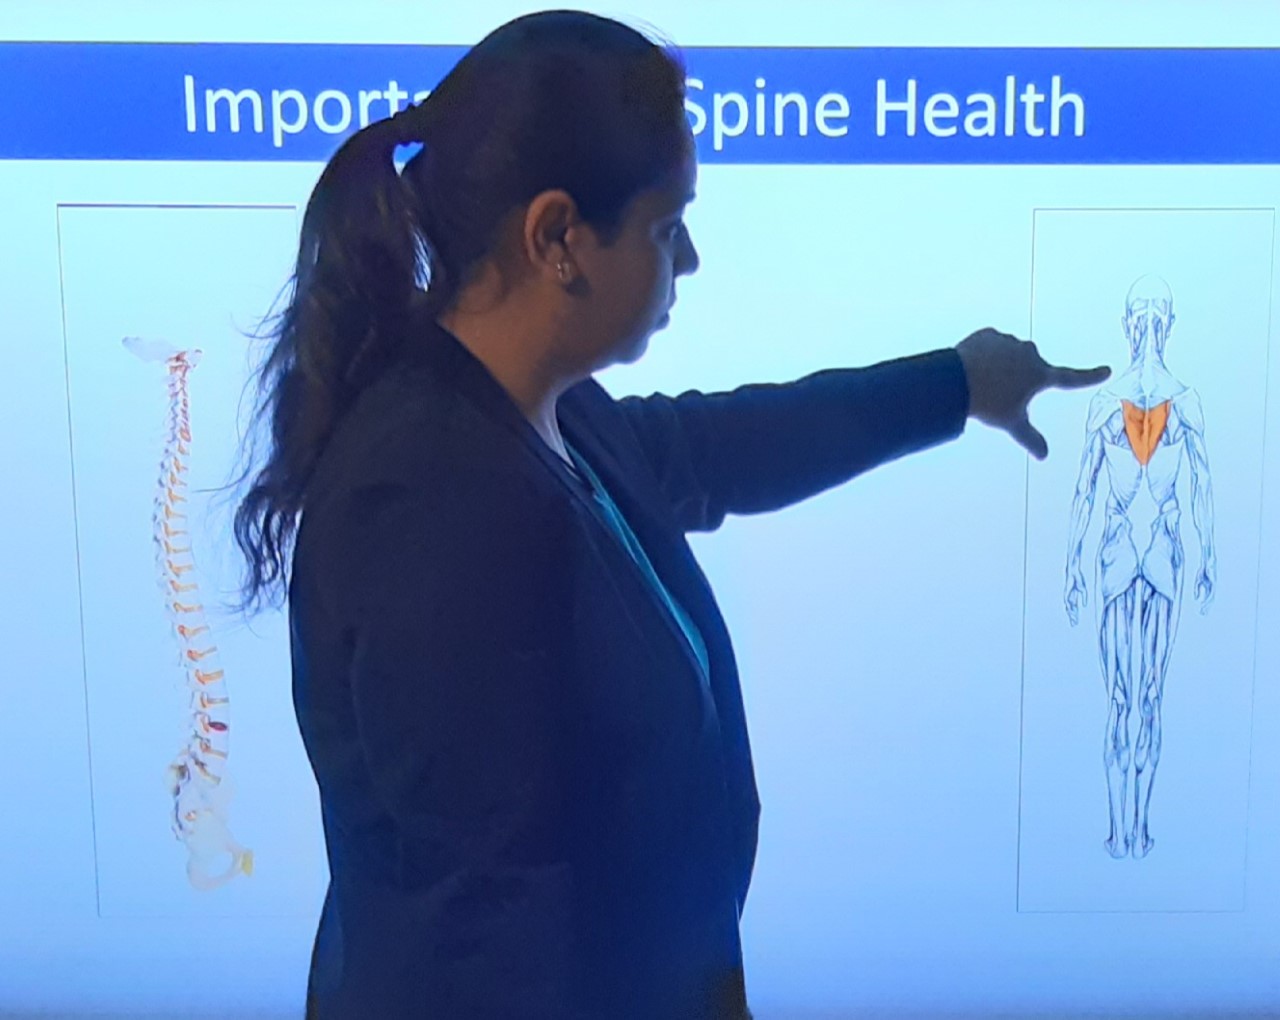 Spine Health